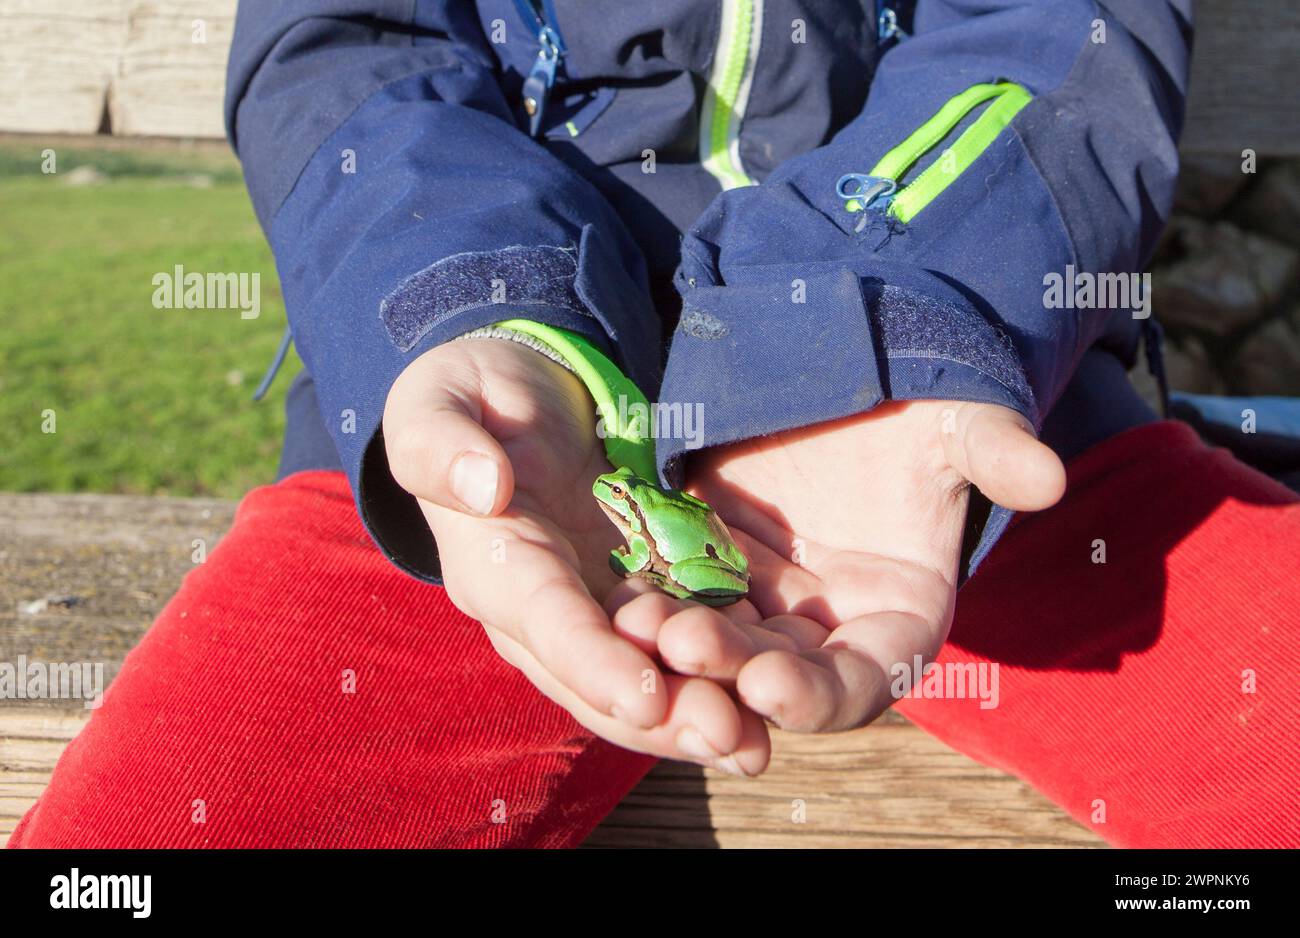 Child boy hands holding European tree frog or hyla arborea Stock Photo